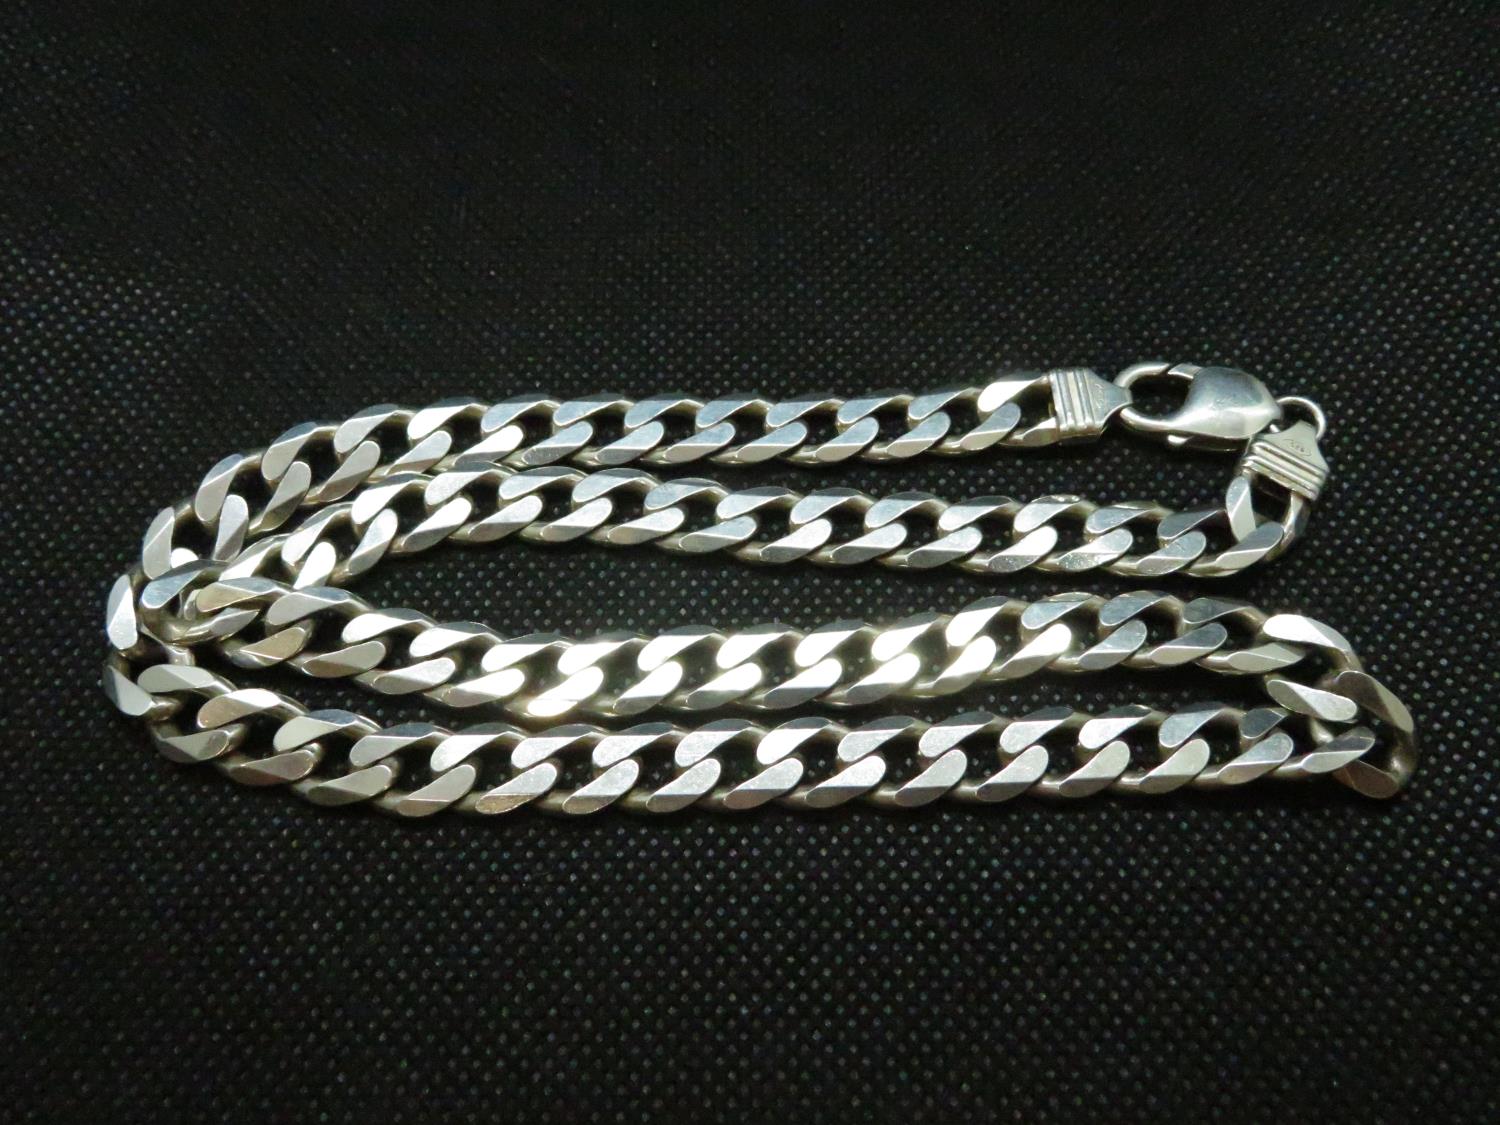 Gentleman's heavy HM silver neck chain 20" long 63g